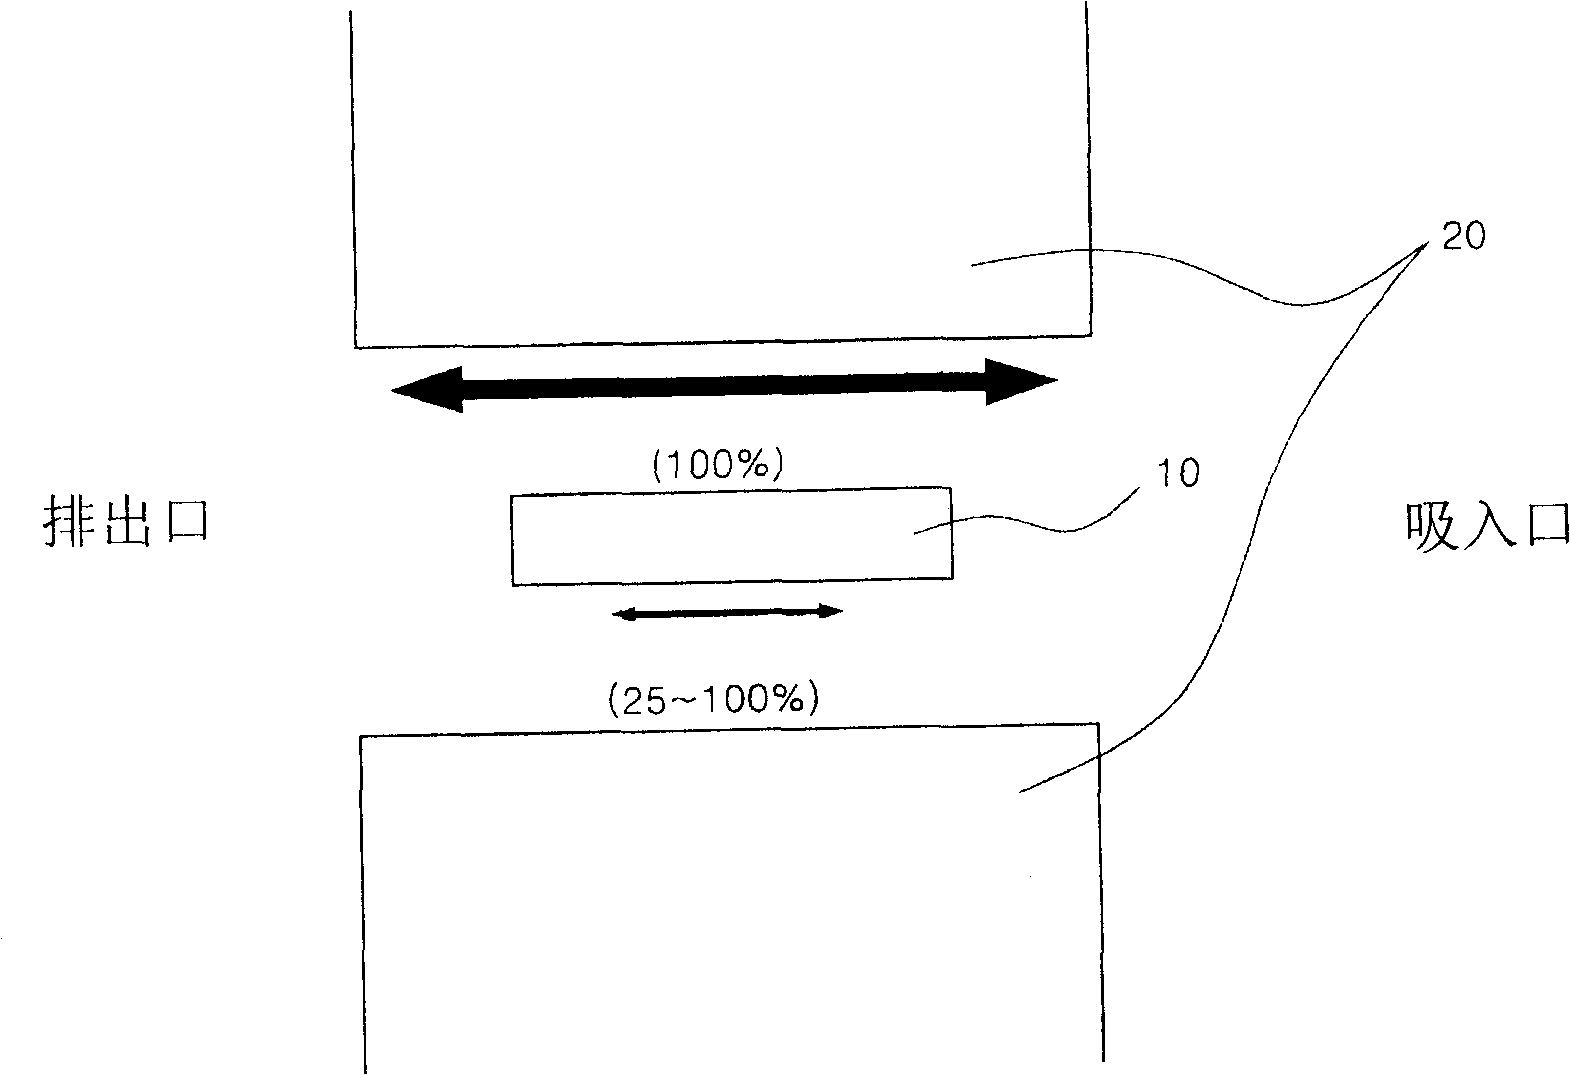 Operation control method for linear compressor